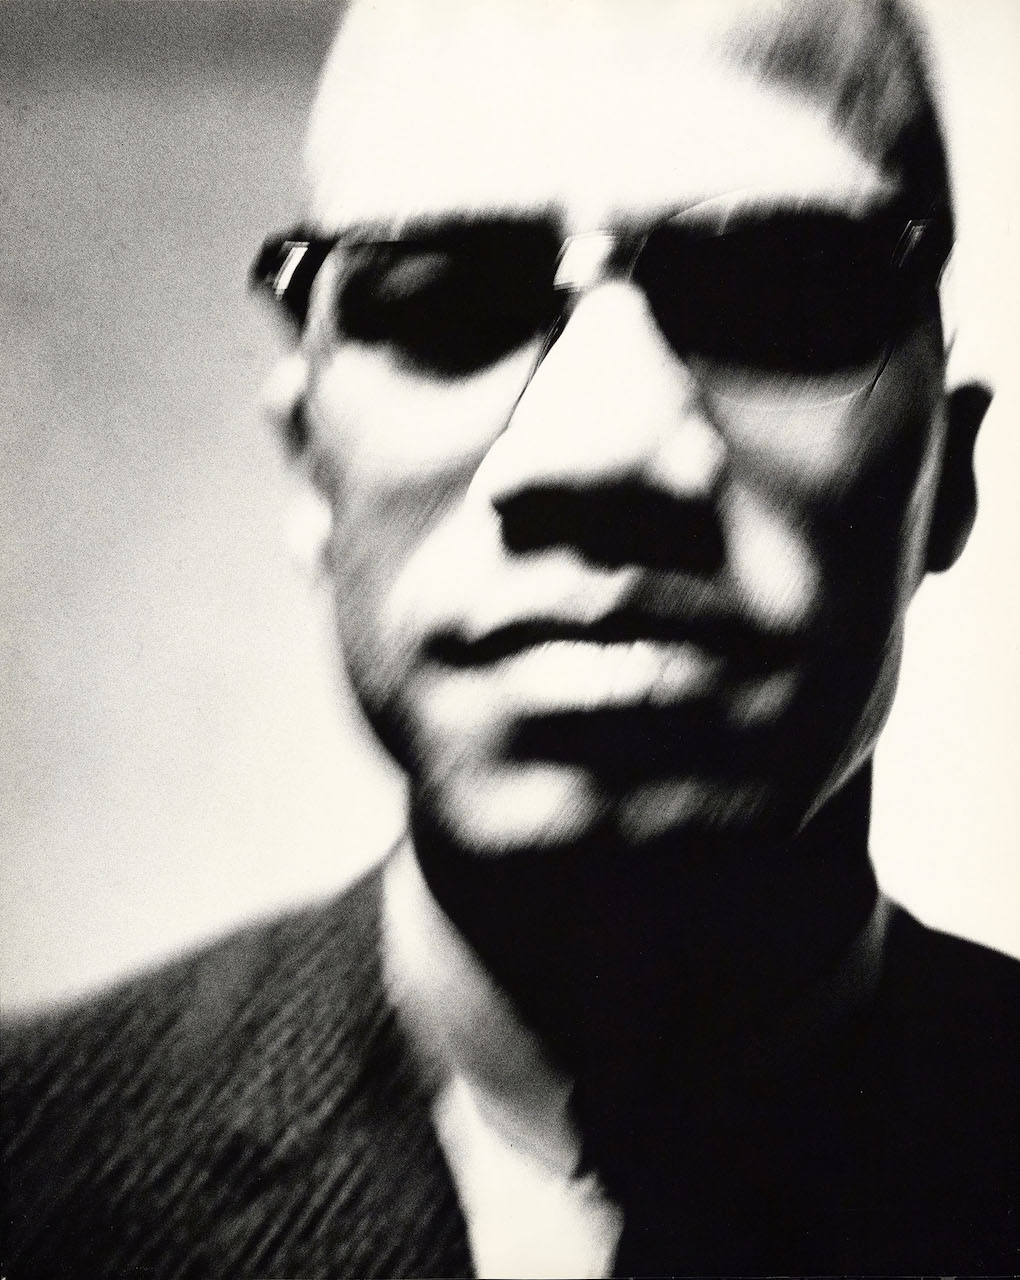 Richard Avedon, Malcolm X, Black Nationalist leader, New York, March 27, 1963 © The Richard Avedon Foundation